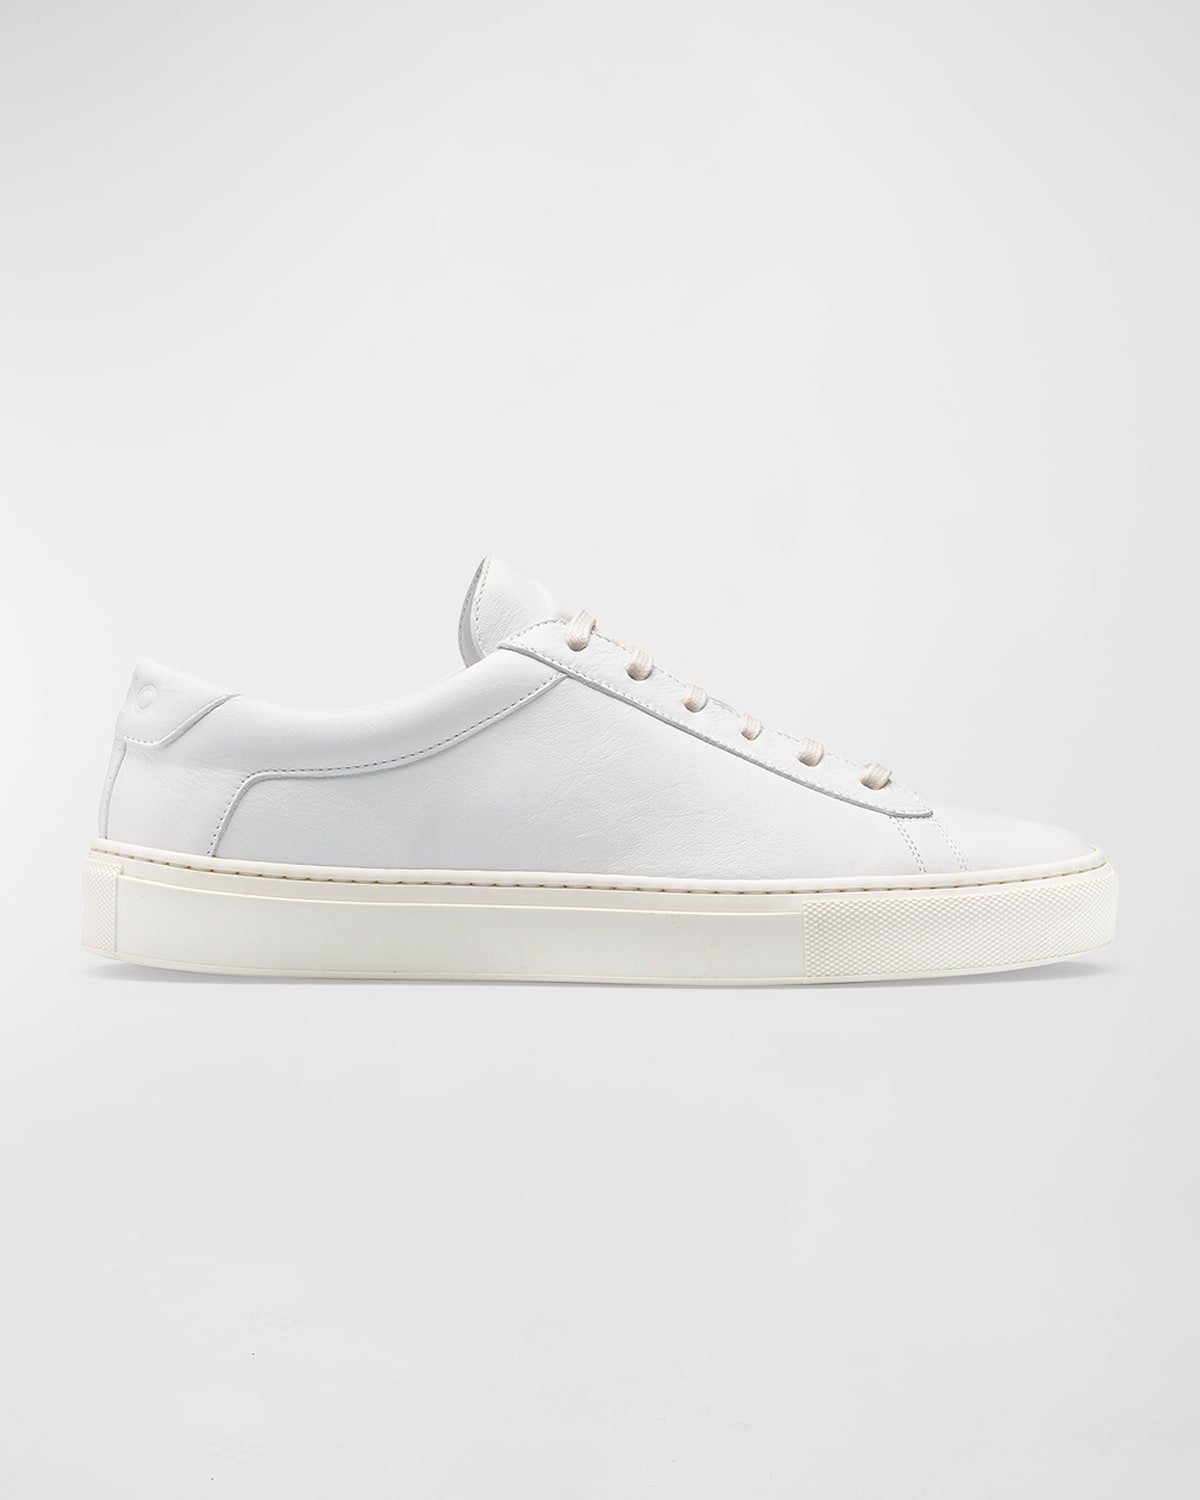 Koio Capri Tonal Leather Low-Top Sneakers